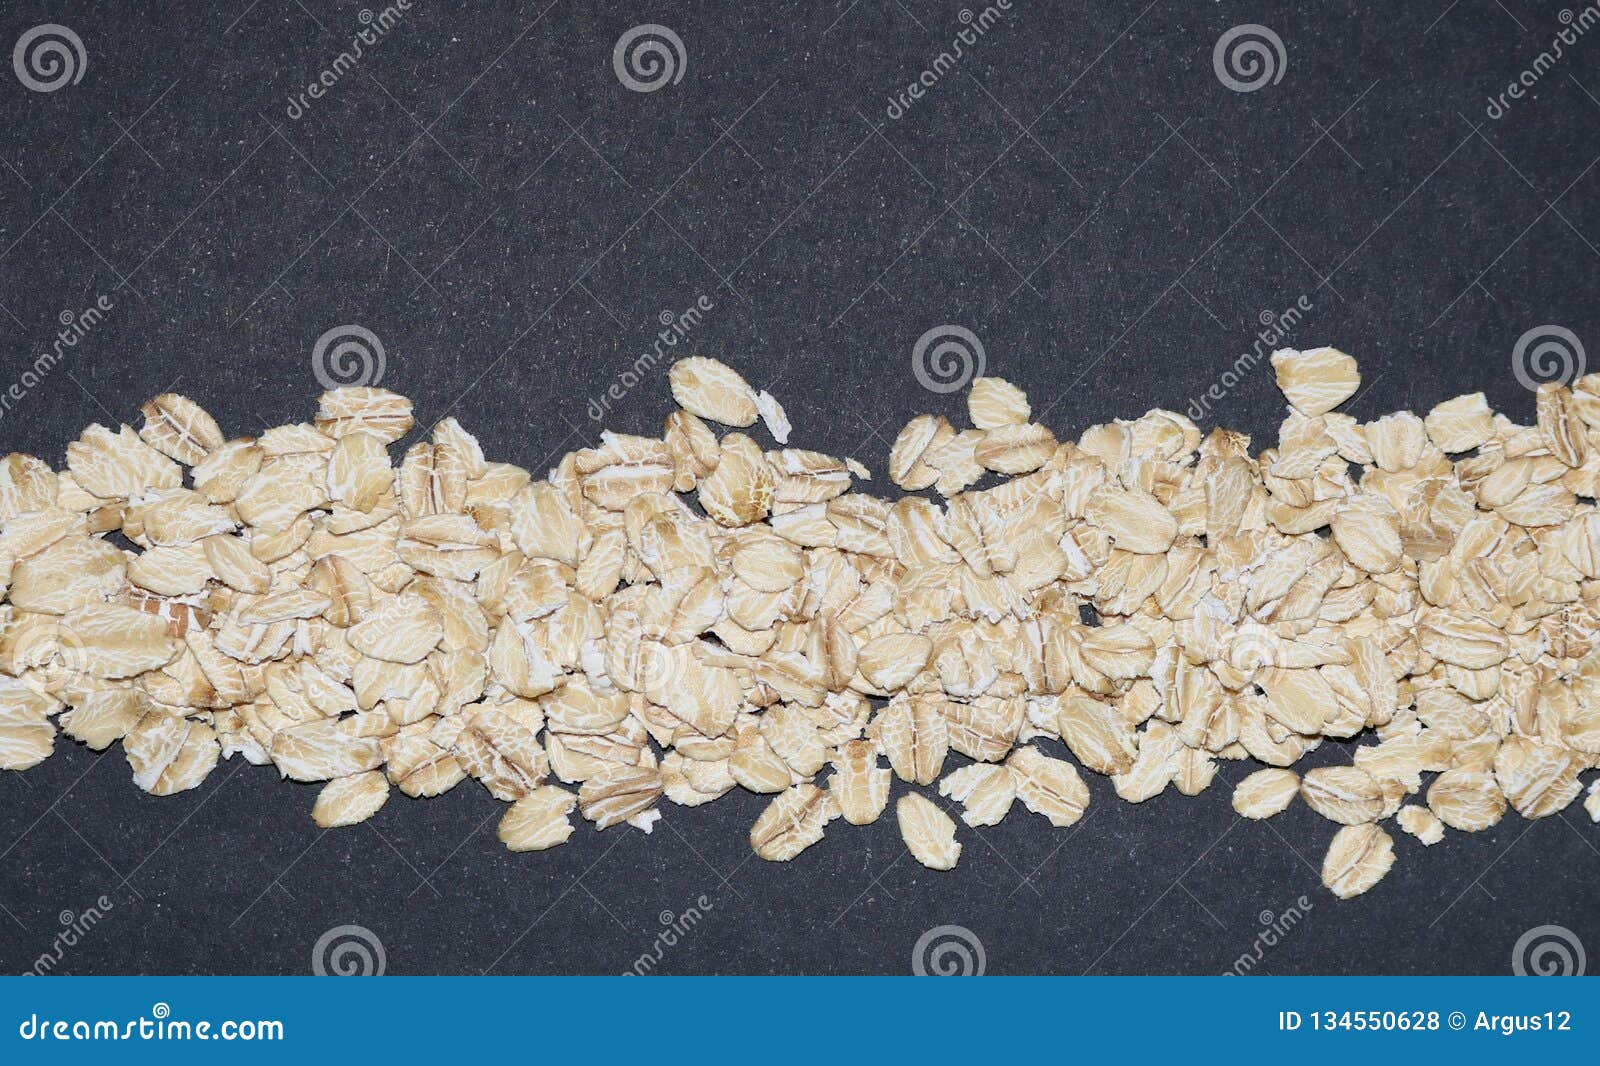 Oatmeal flakes stock photo. Image of flaking, flakes - 134550628